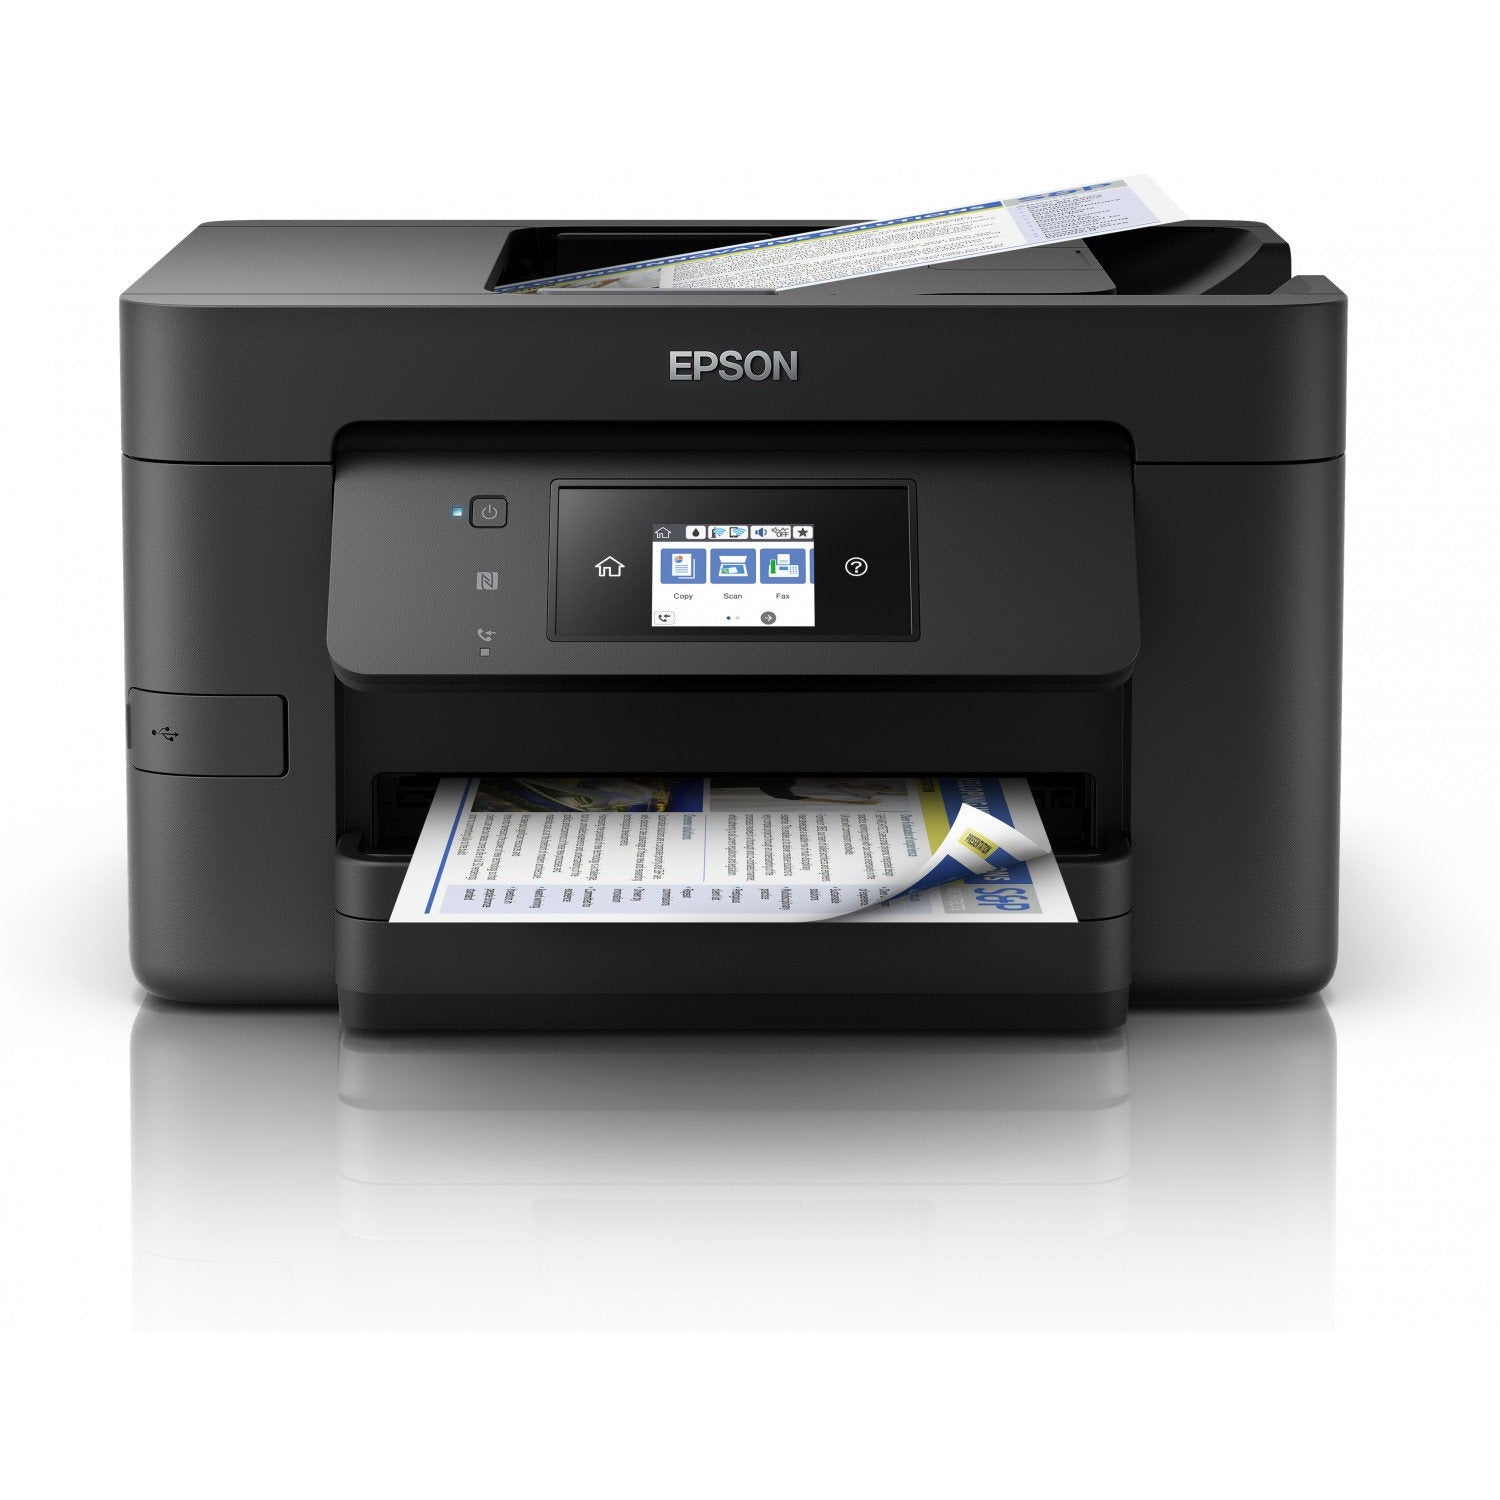 Epson WF-3720DWF All-in-one printer scanner copier